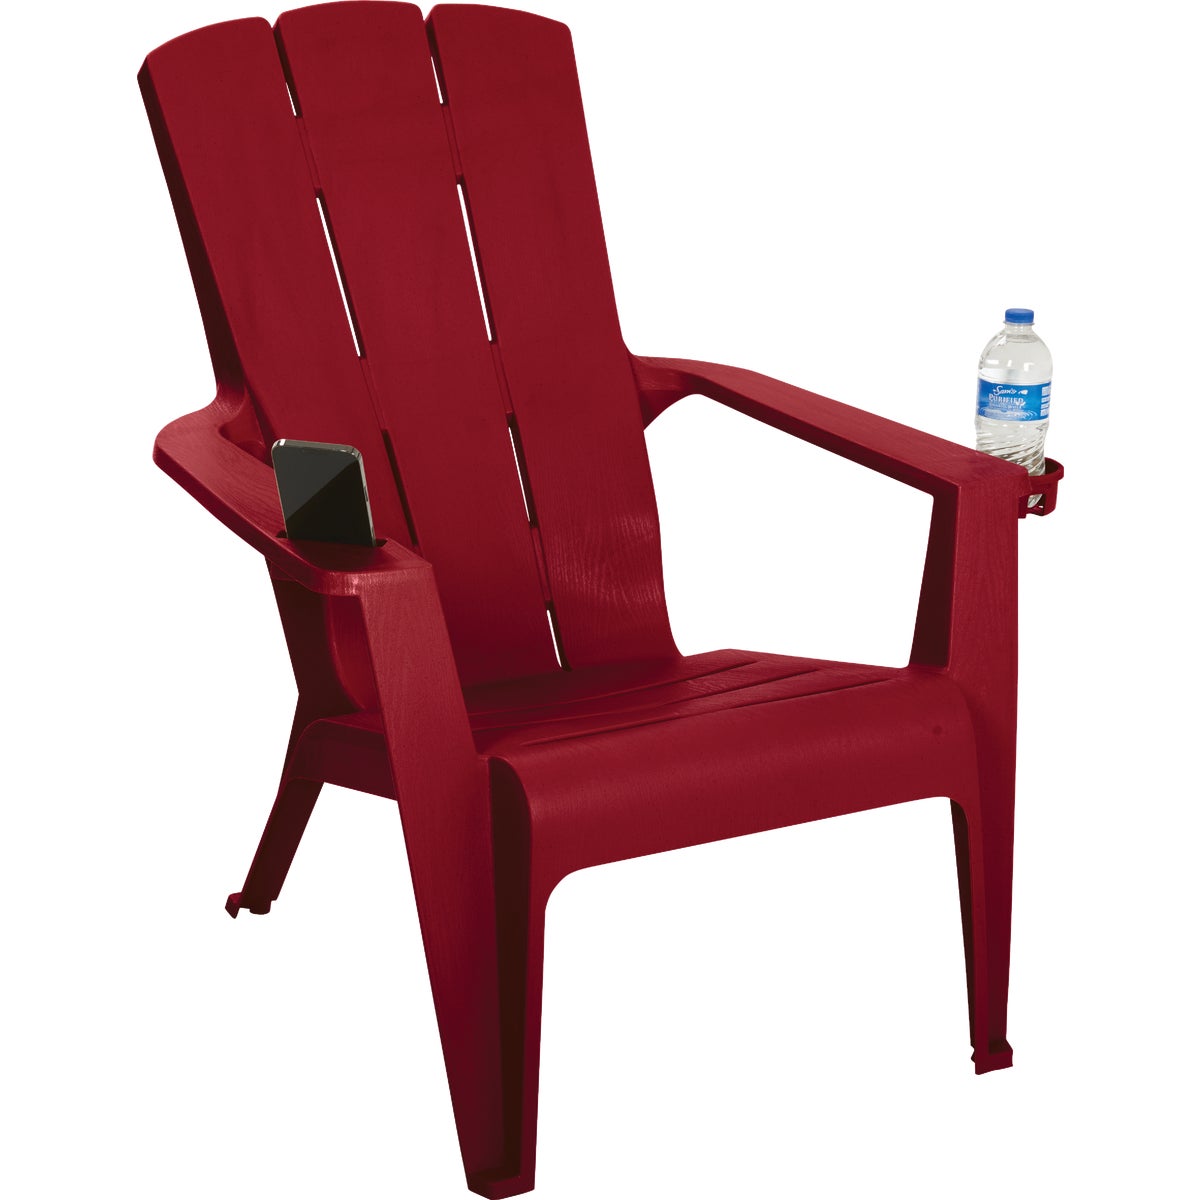 Gracious Living Crimson Red Deluxe Contour Adirondack Chair